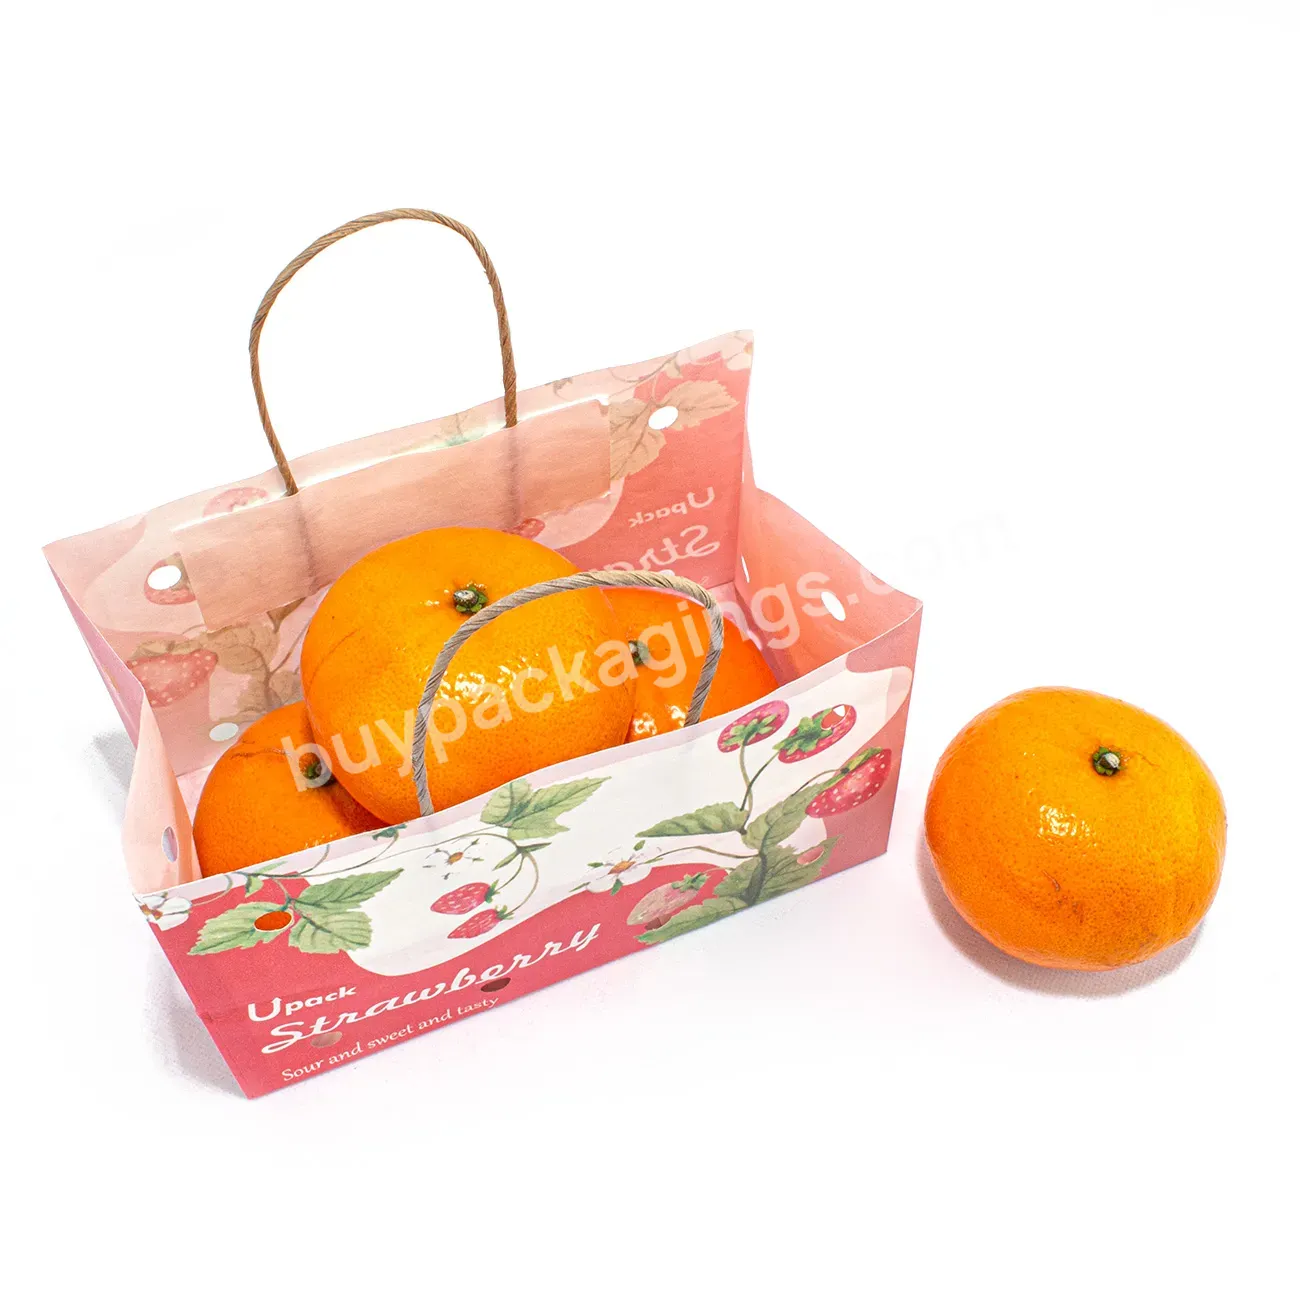 Personal Design Apples Grapes Orange Brown Wet Strength Paper Fruit Packaging Bag With Handle - Buy Paper Bag Apples,Orange Paper Bag,Grape Paper Bag.